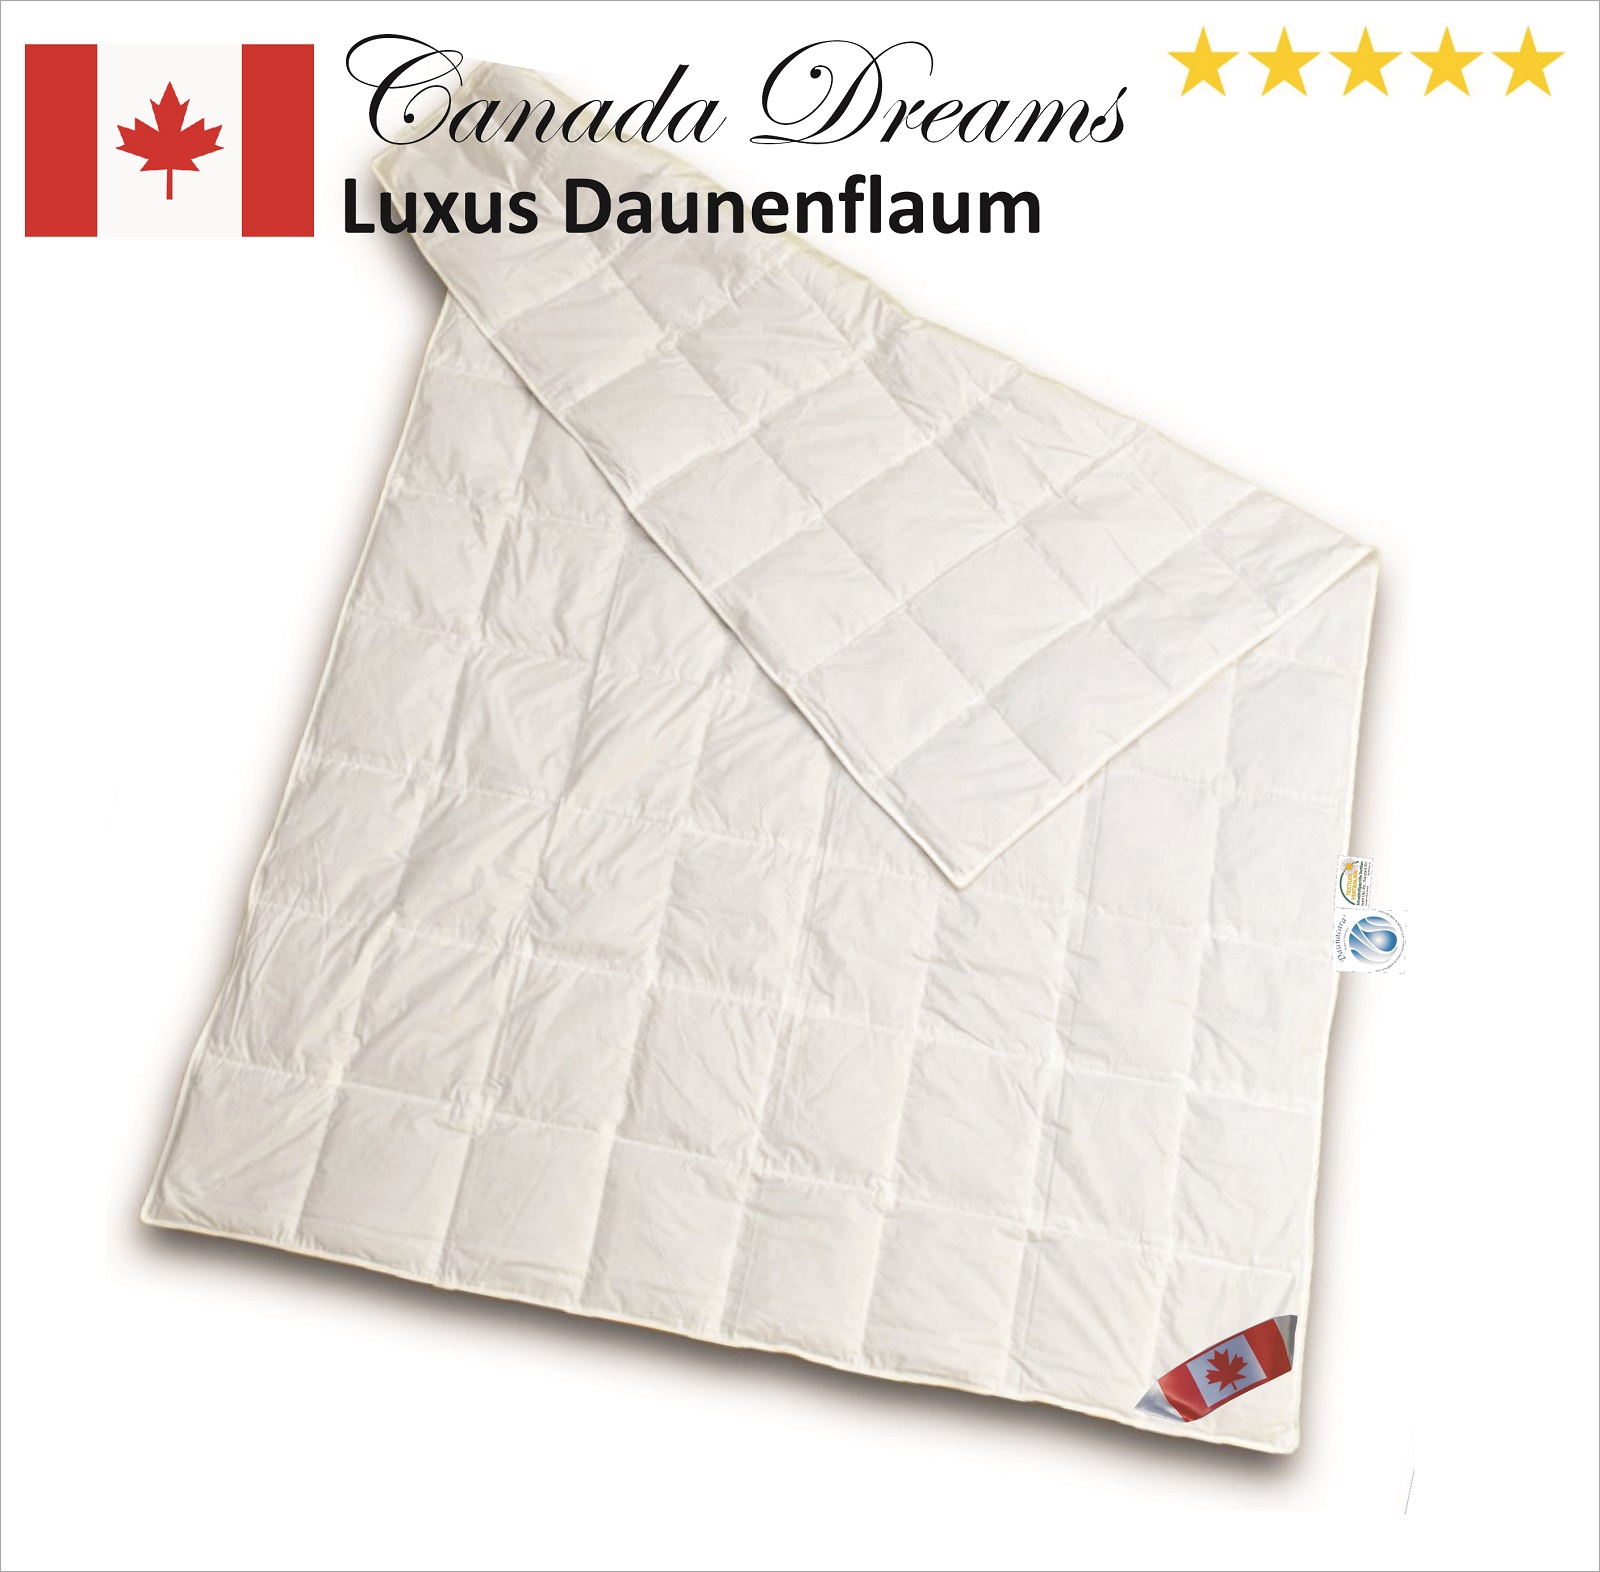 Canada Dreams Luxus Sommerdecke Daunendecke Daunenflaum CD1 220x240 leicht